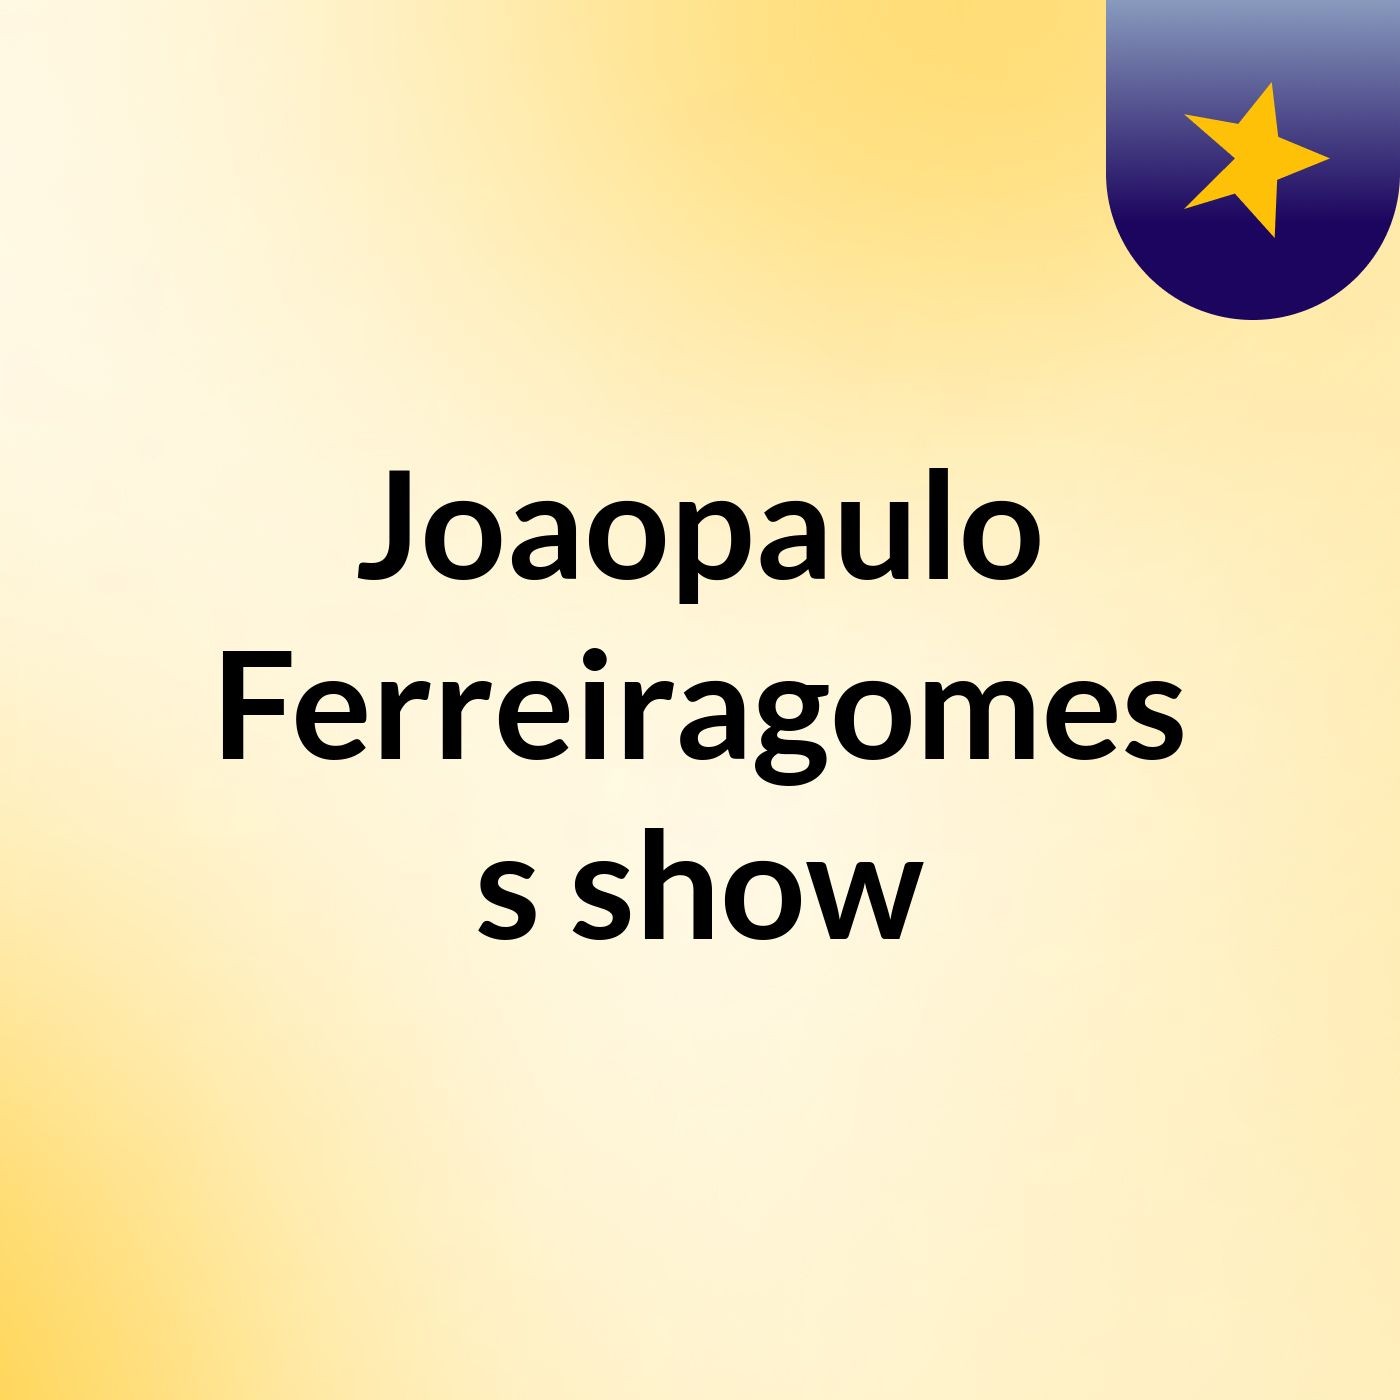 Joaopaulo Ferreiragomes's show